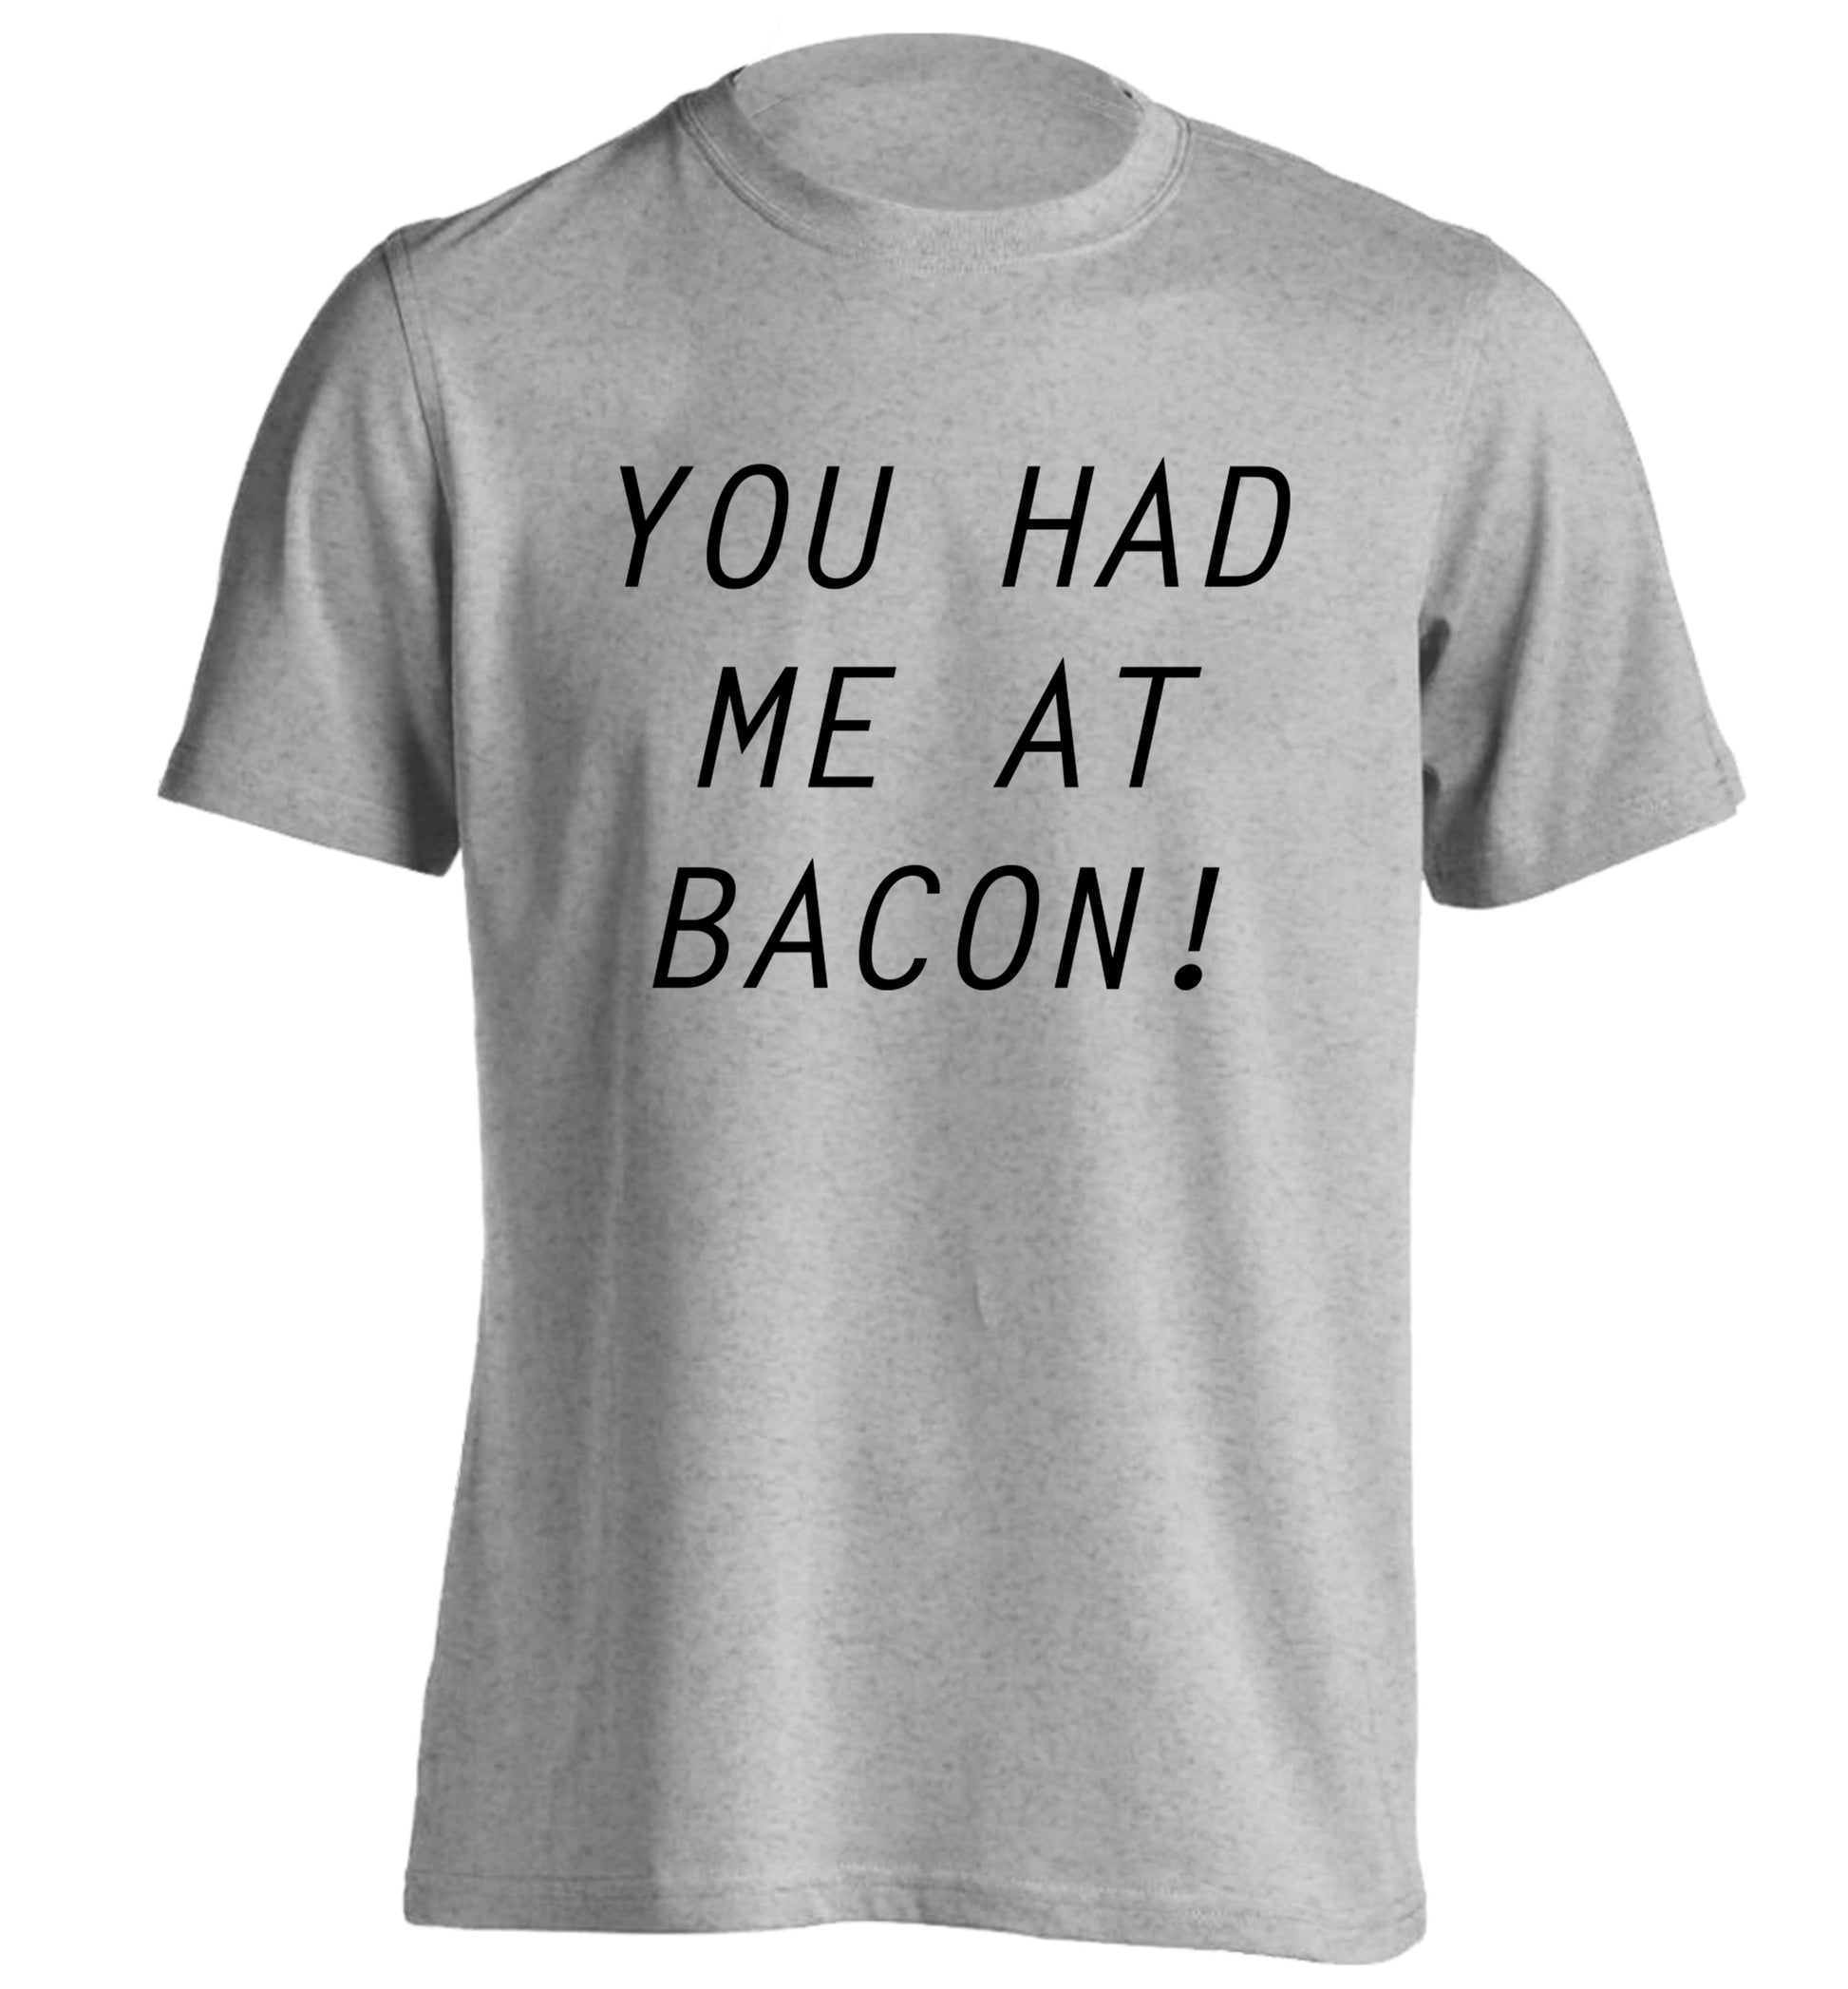 You had me at bacon adults unisex grey Tshirt 2XL